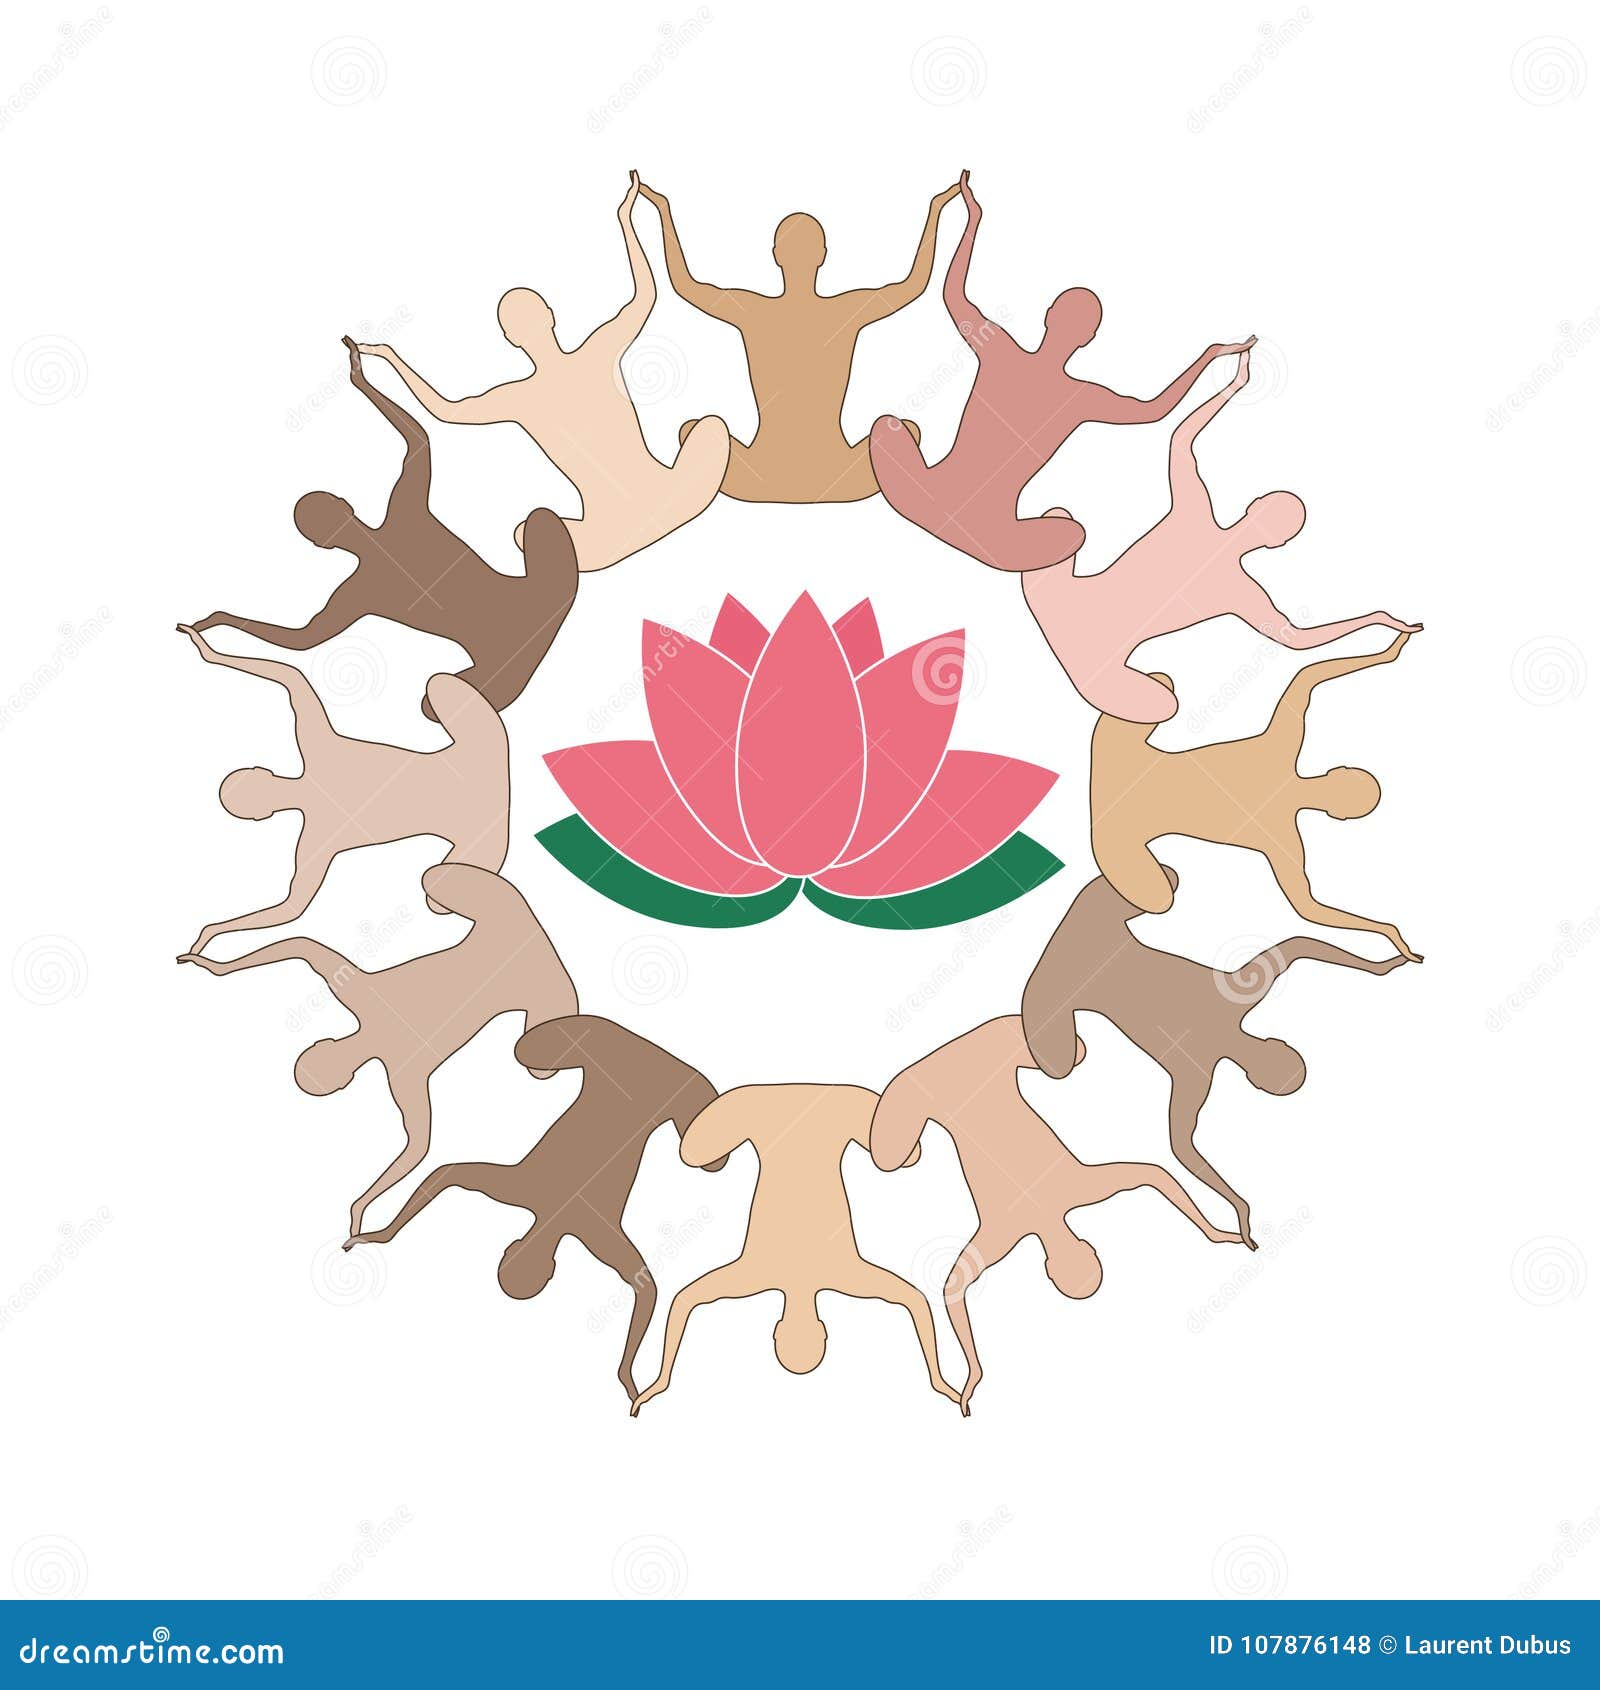 yoga and zen - logo lotus collection